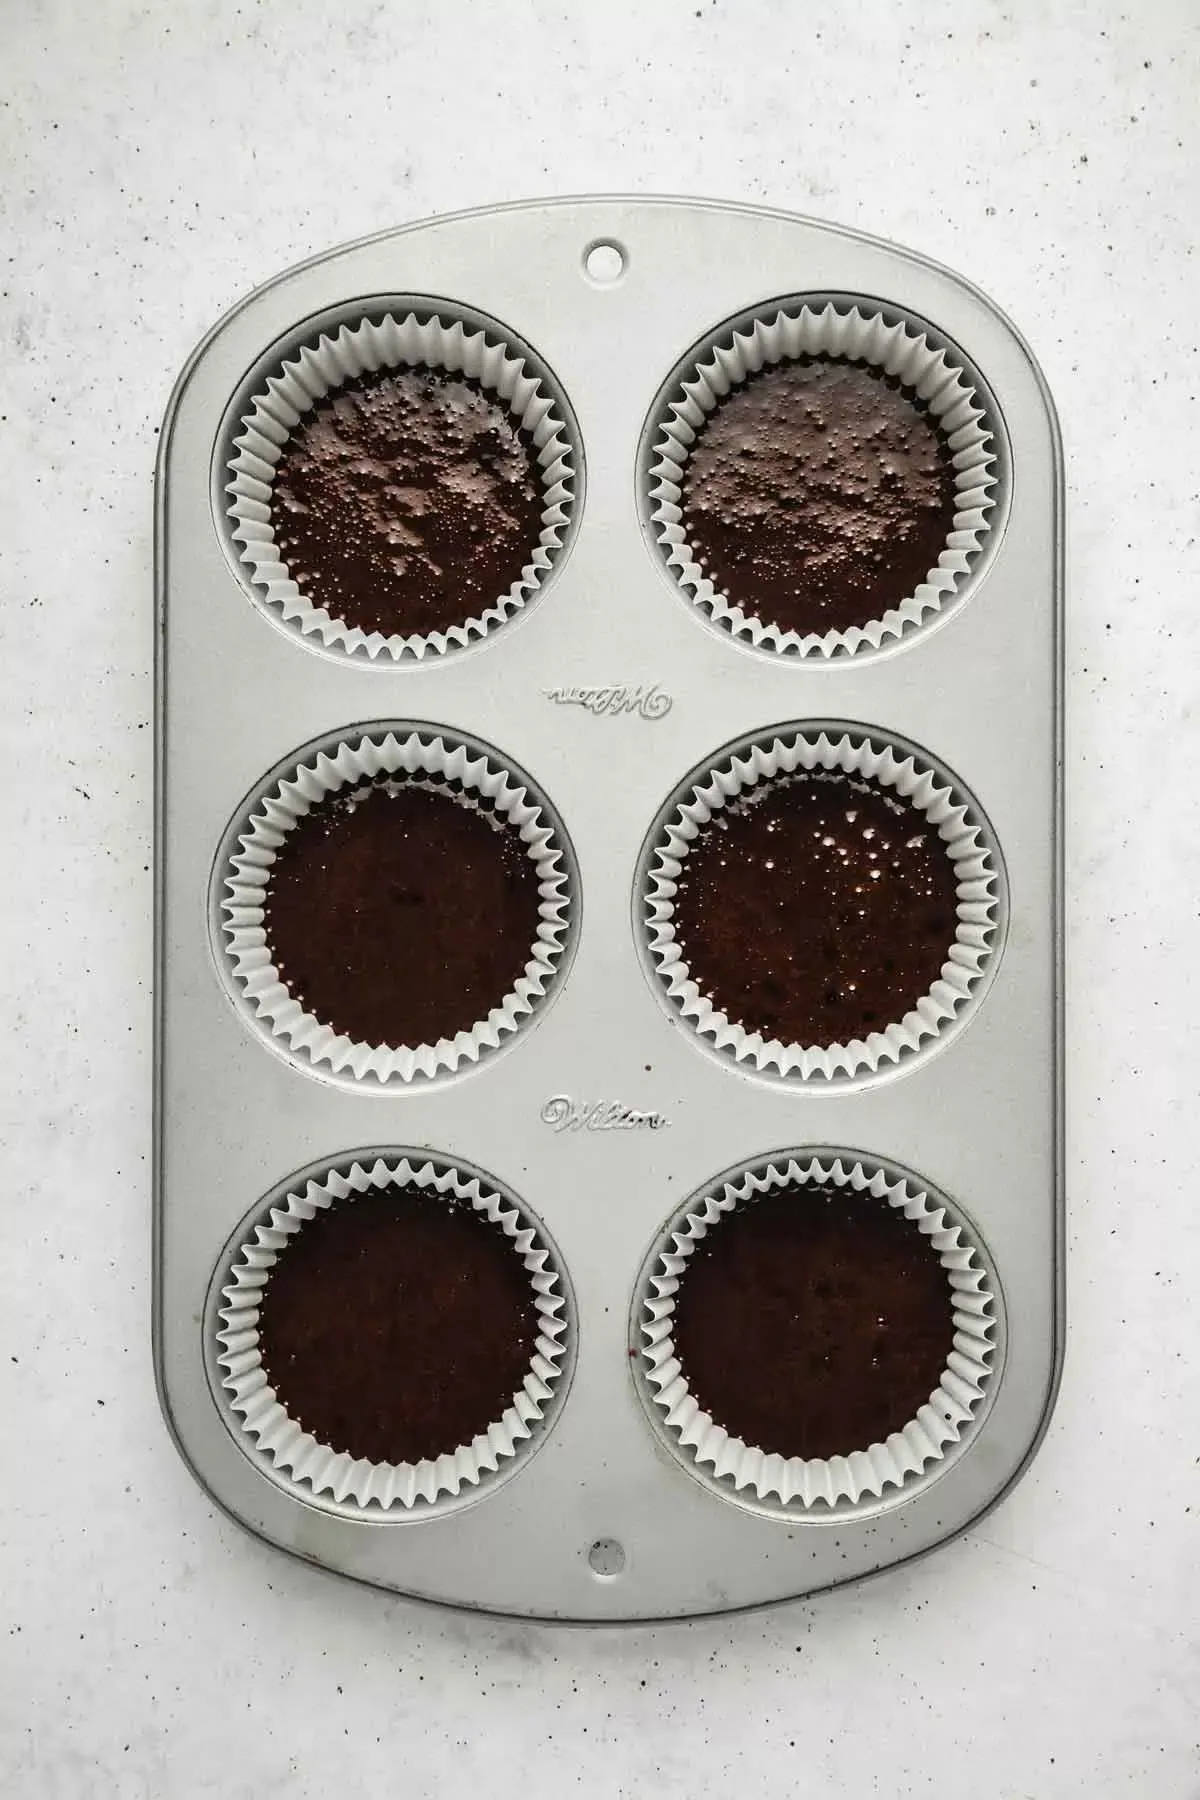 Chocolate cupcakes before baking